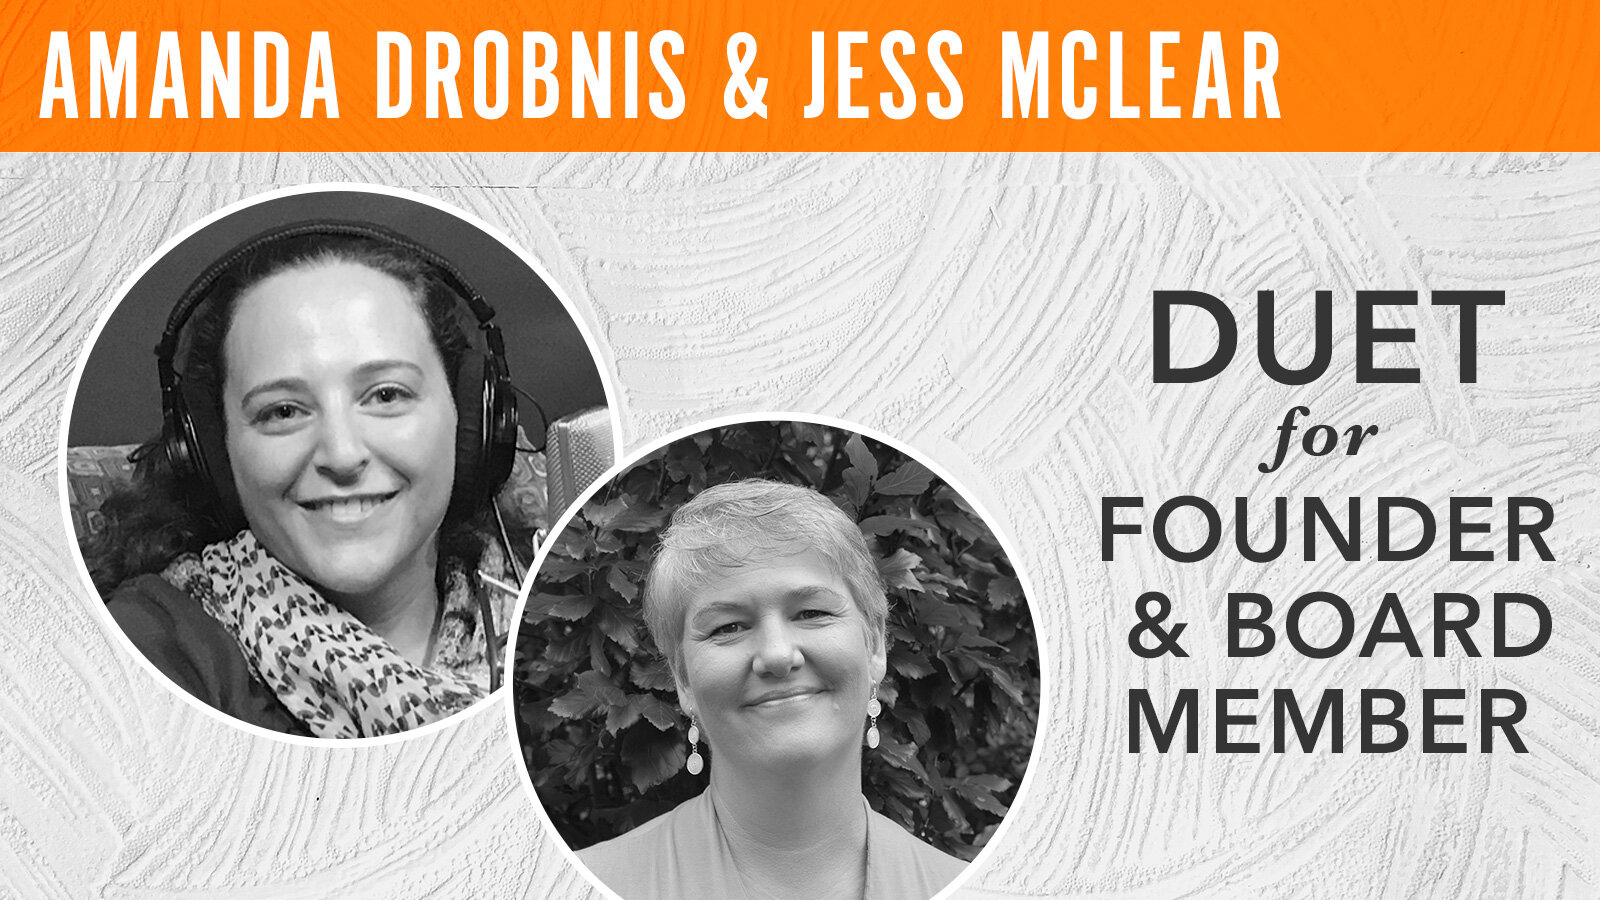 Amanda Drobnis and Jess McLear, "Duet for Founder & Board Member"